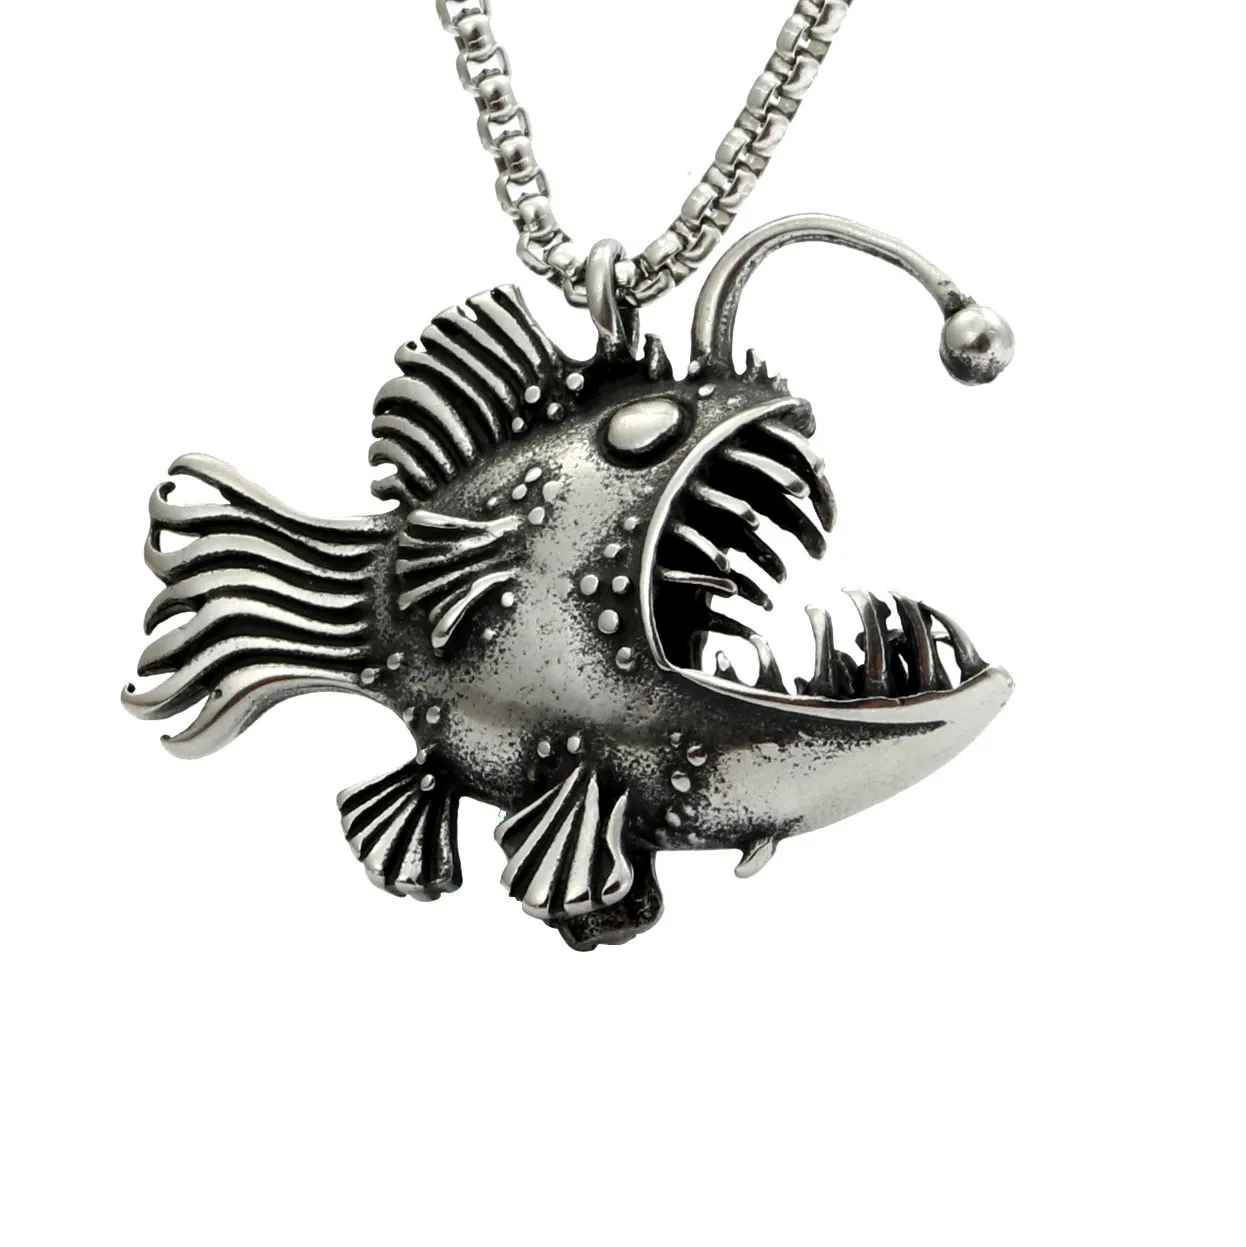 New stainless steel lantern fish pendant retro personality pendant men's titanium steel pendant jewelry necklace